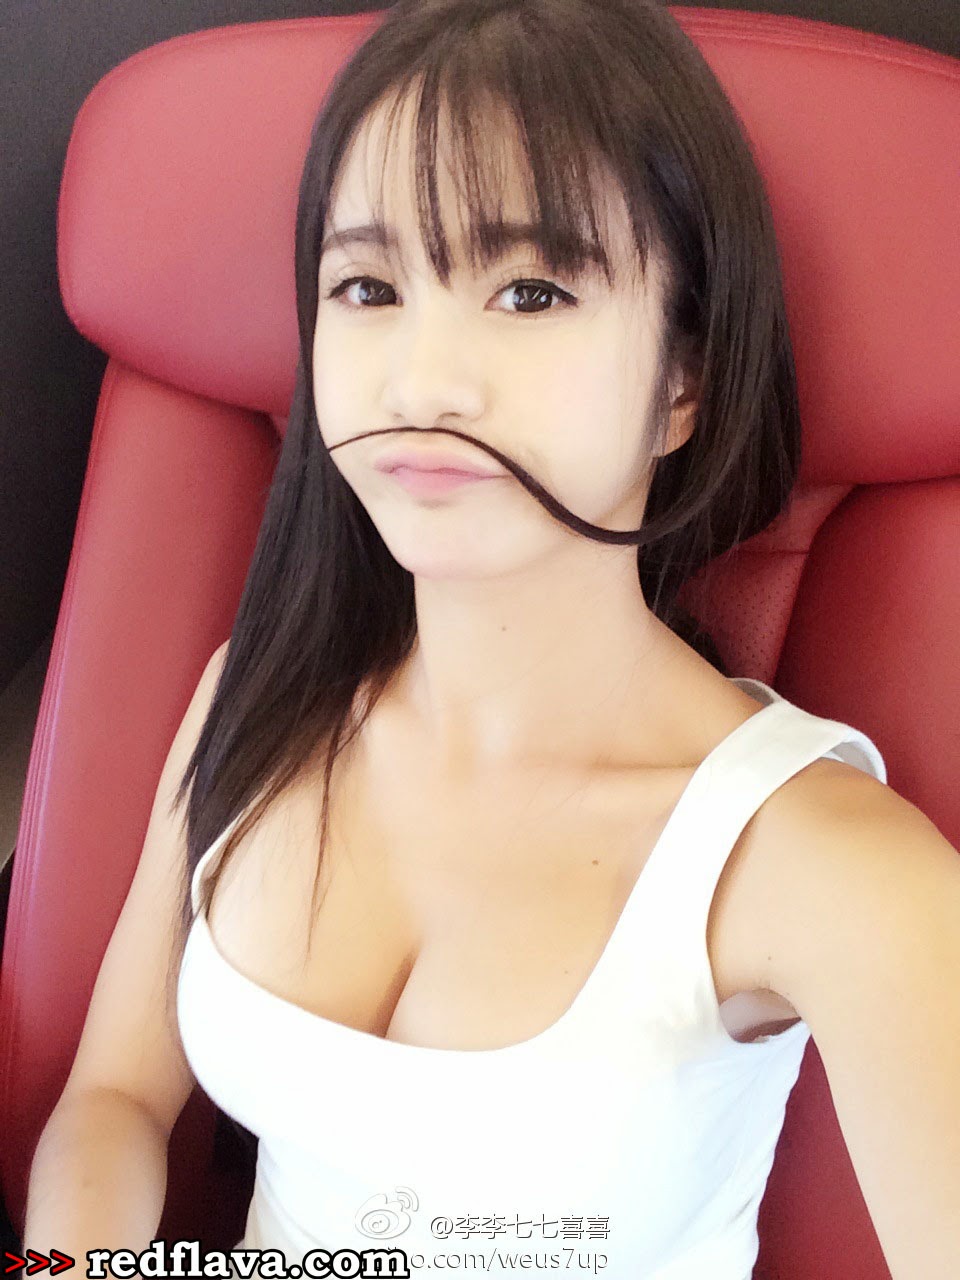 Li Qi Xi 李 七喜 - cute and rising Asian model and Internet celebrity.